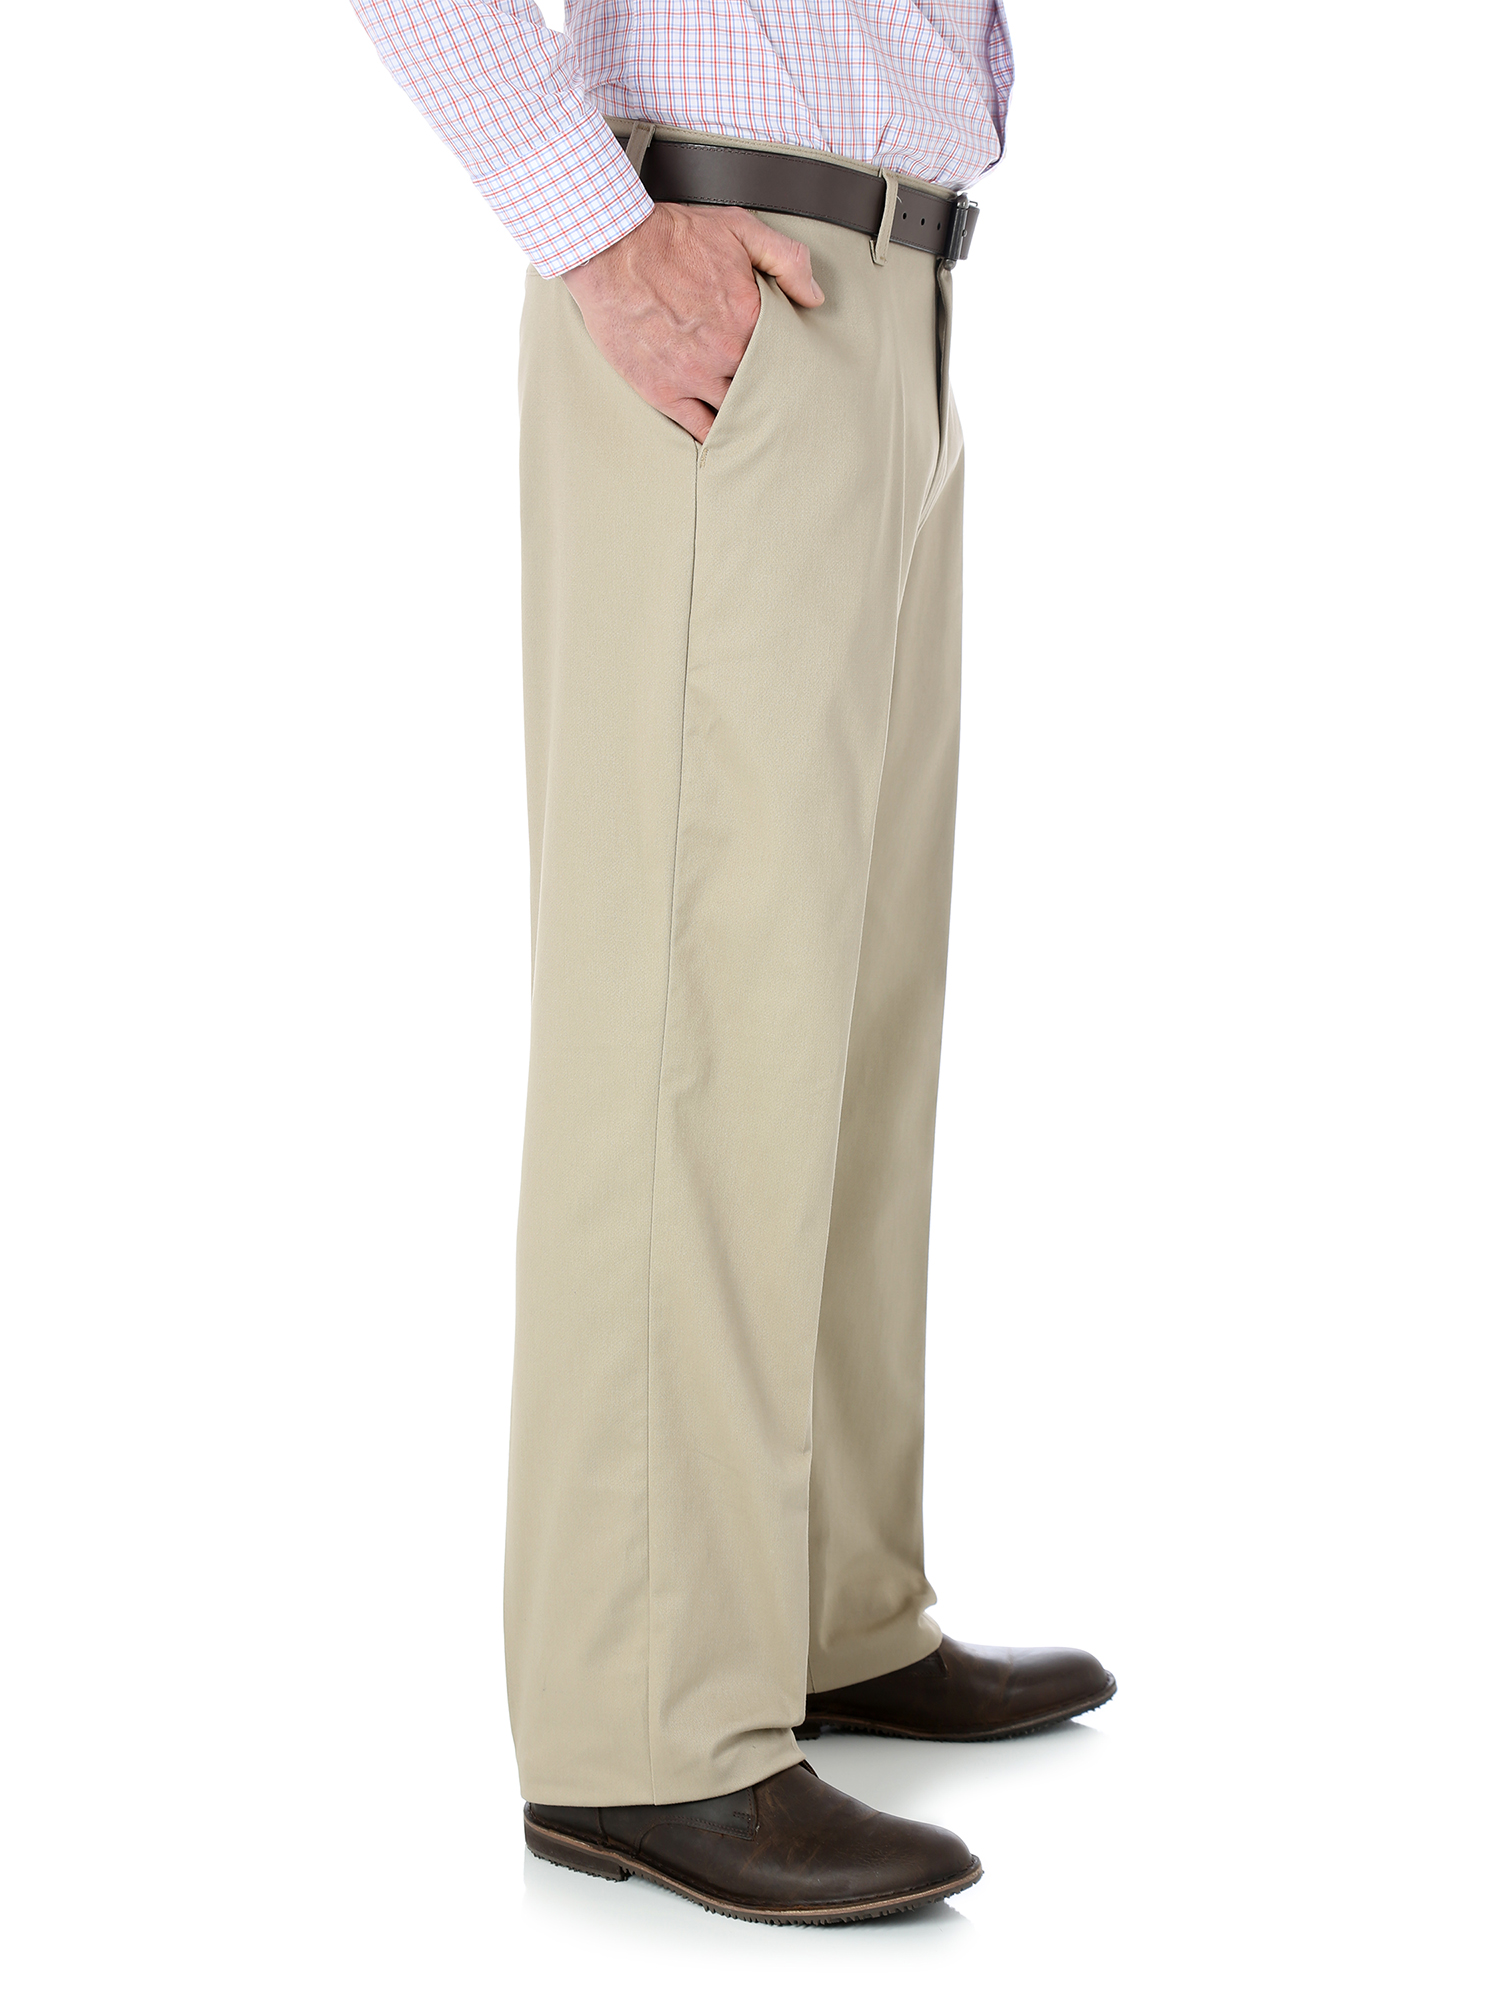 Big Men's Advanced Comfort Flat Front Pants - image 2 of 3